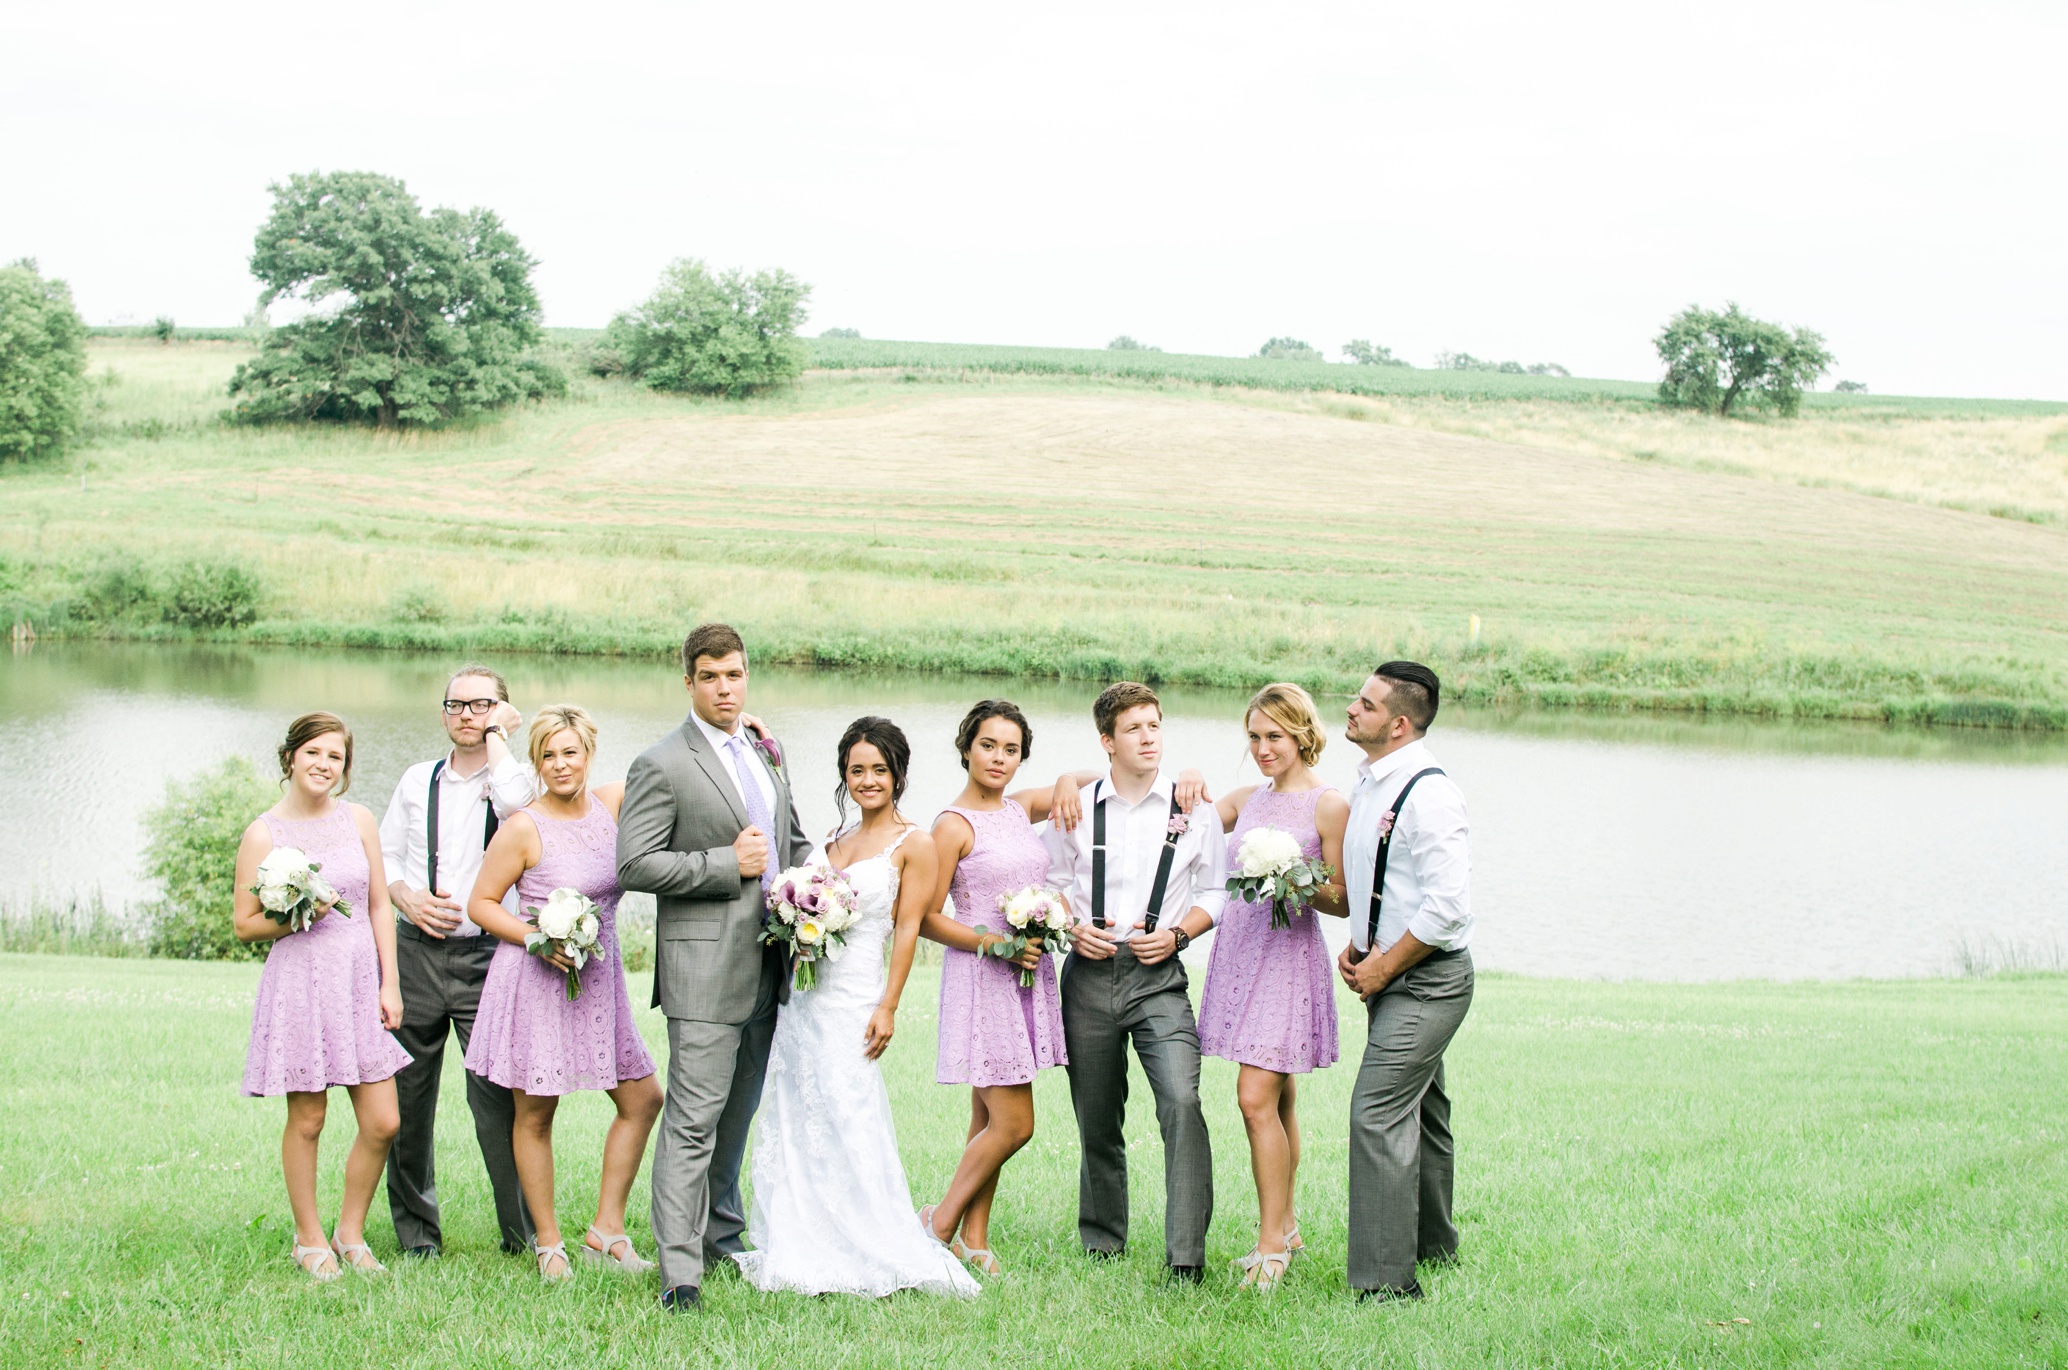 Barnes' Place Rustic Outdoor Wedding | Ali Leigh Photo Minneapolis Wedding Photographer_0141.jpg